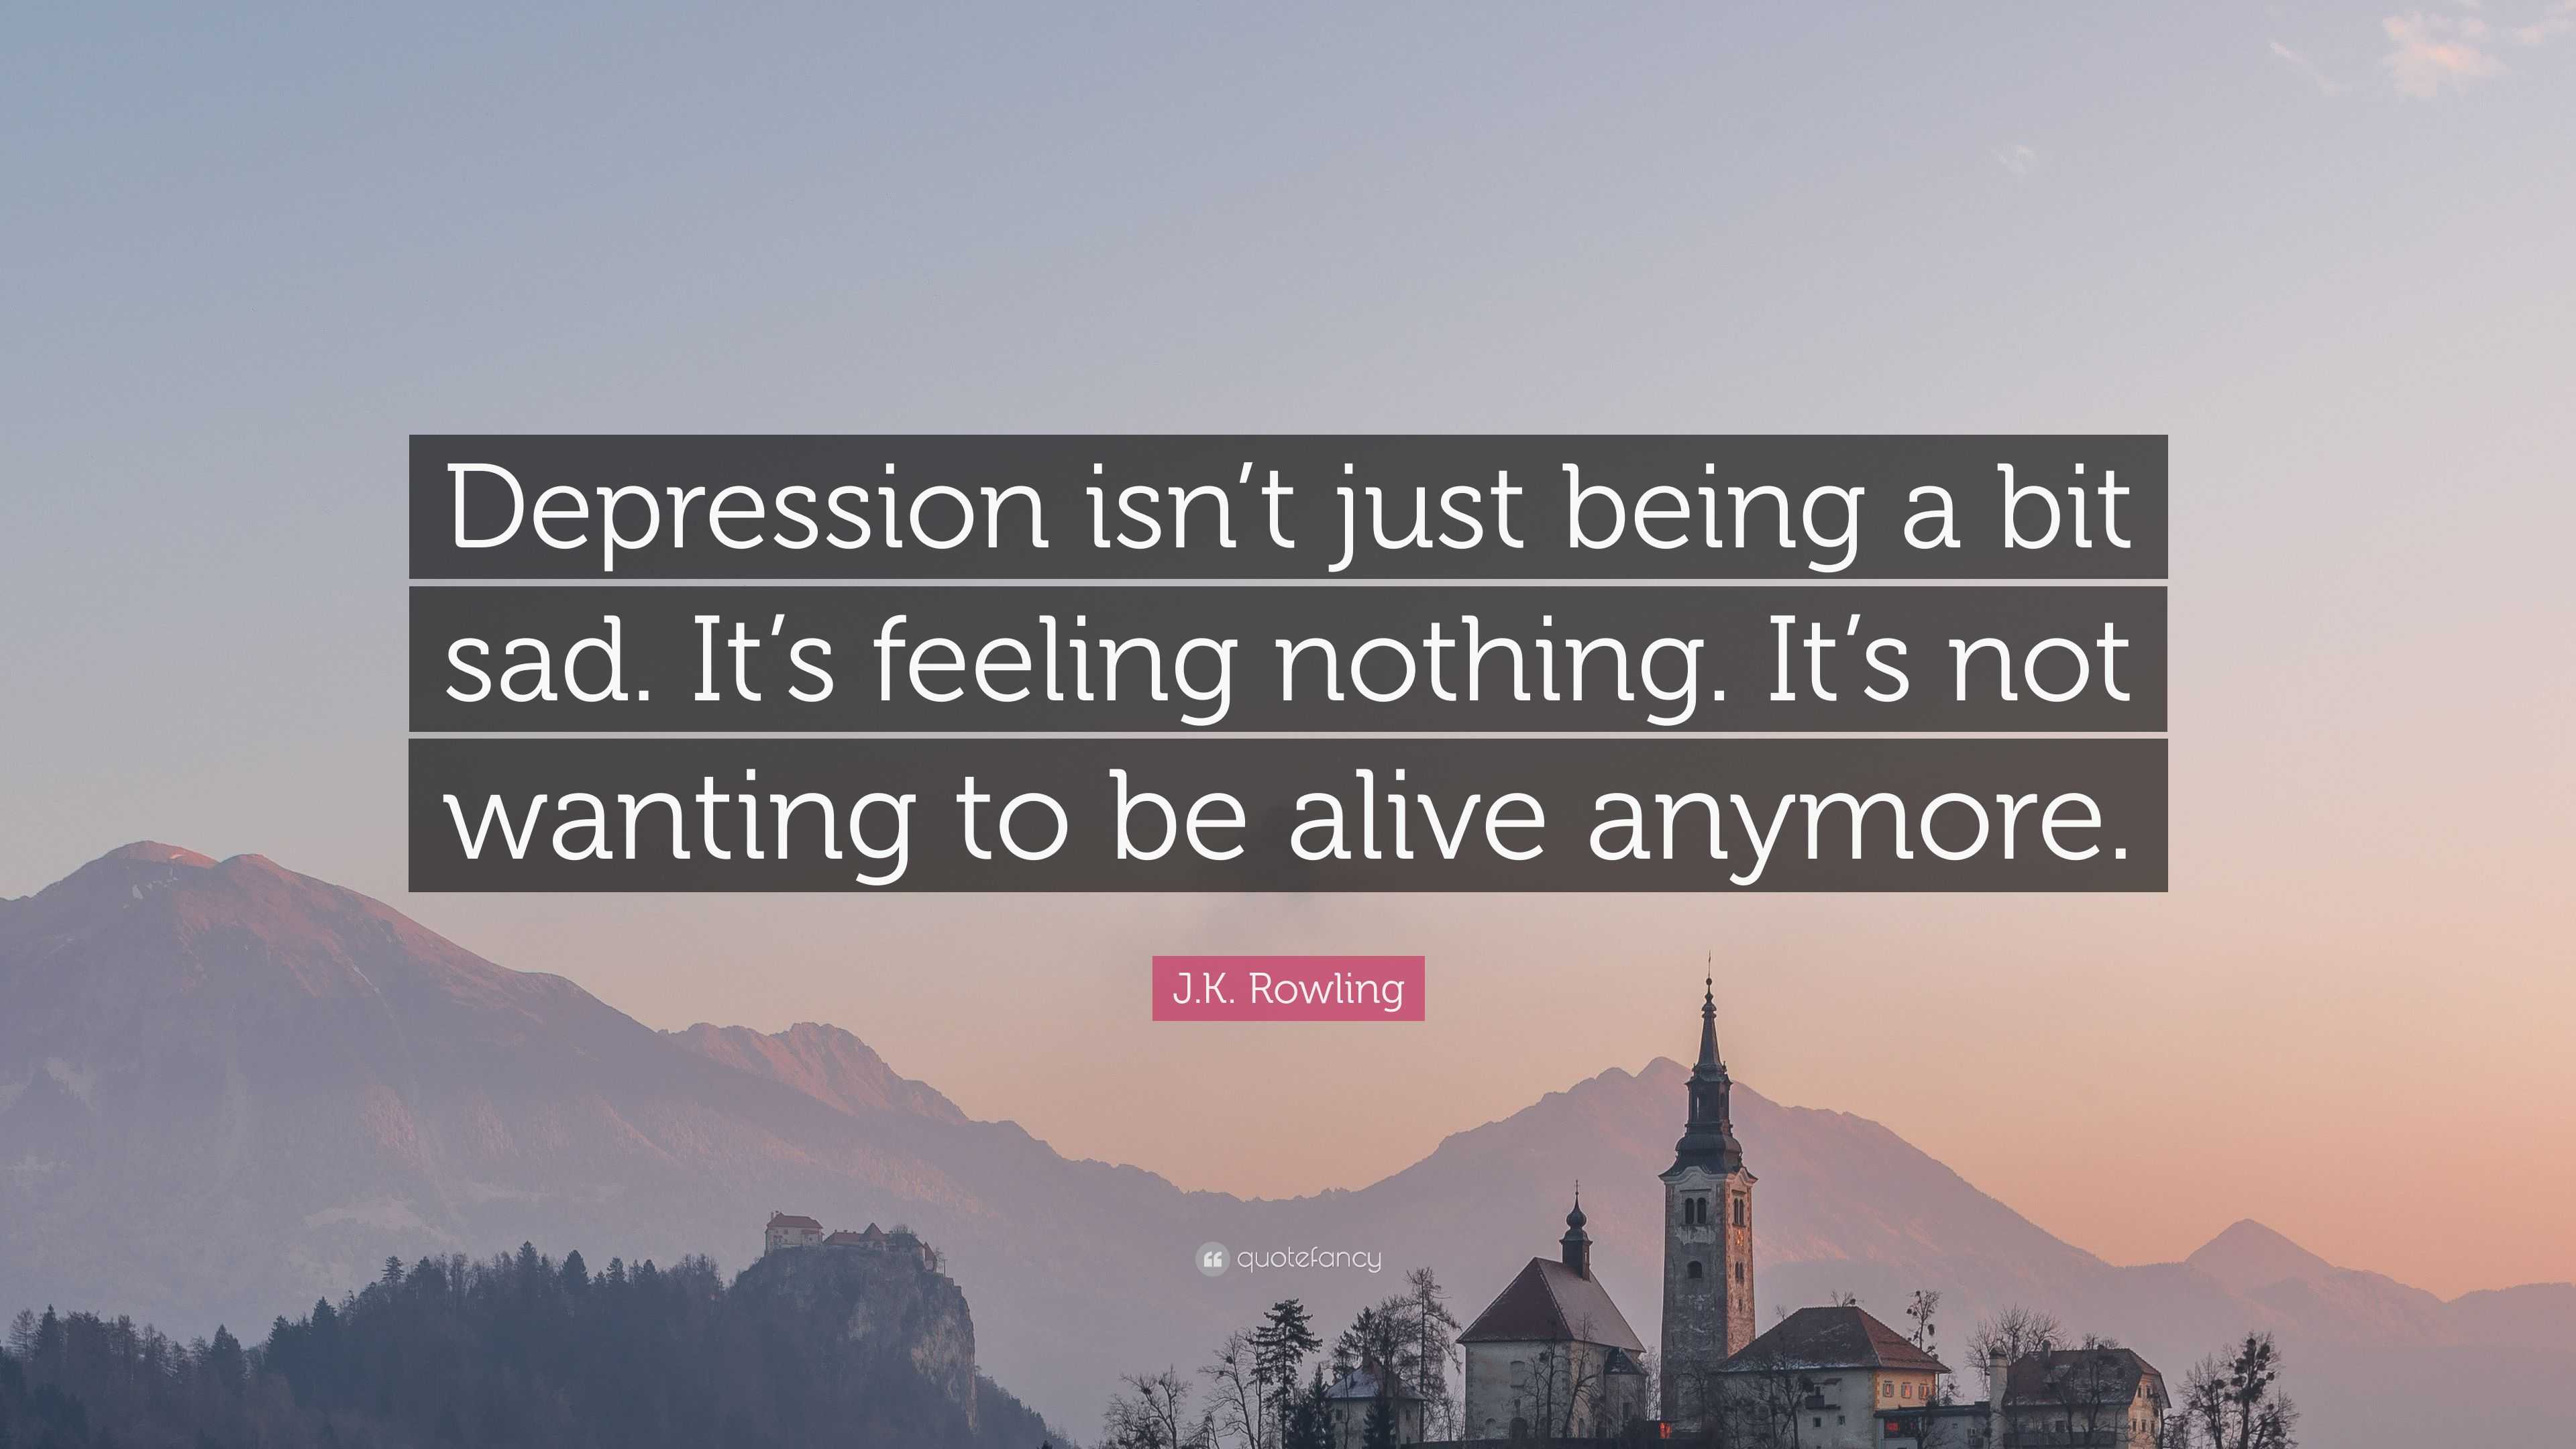 J.K. Rowling Quote: “Depression isn’t just being a bit sad. It’s ...